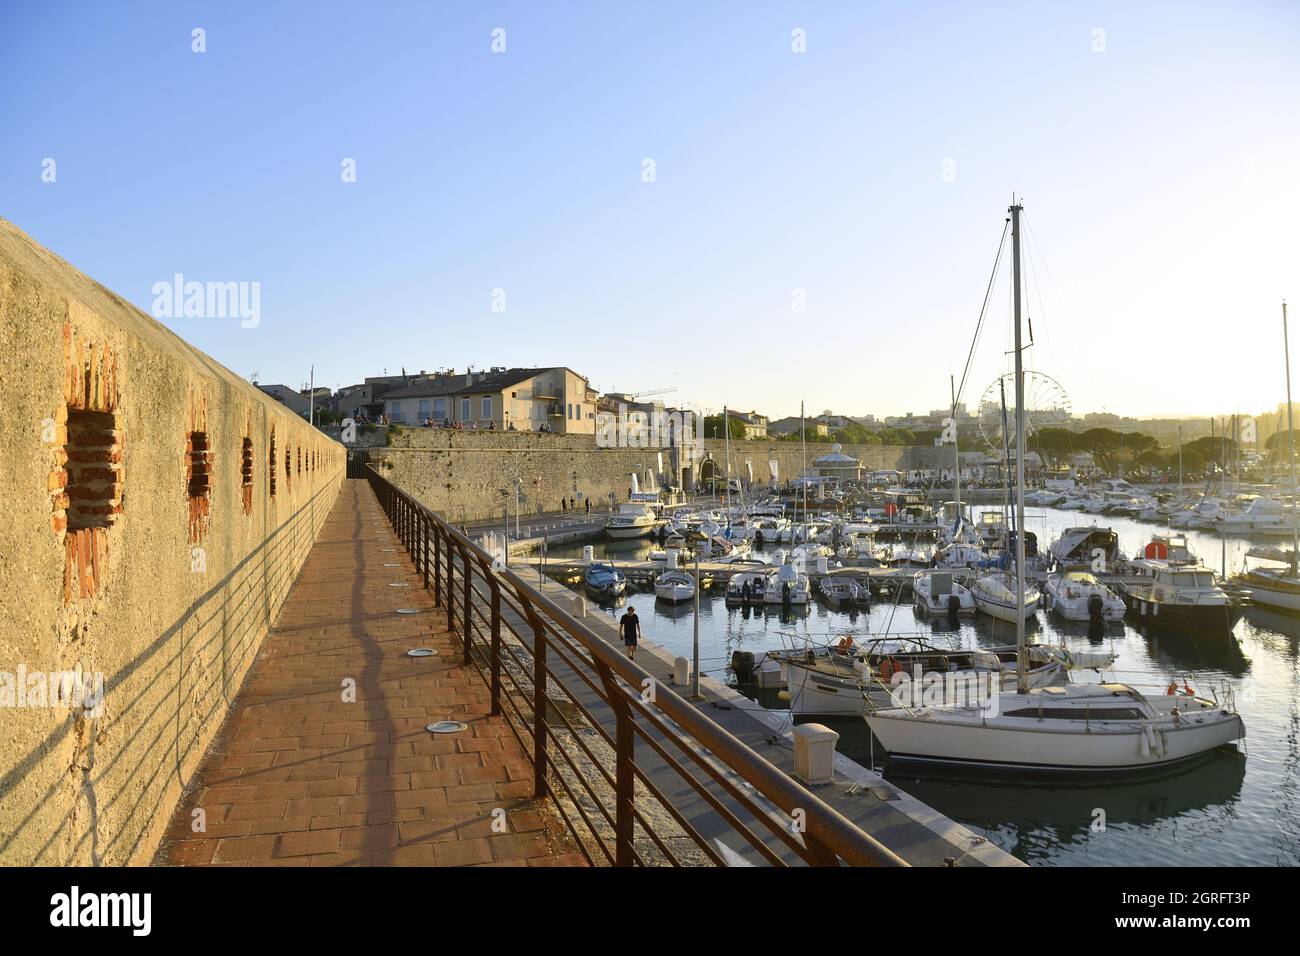 France, Alpes Maritimes, Antibes, Port Vauban with the Vauban ramparts of the Old town Stock Photo